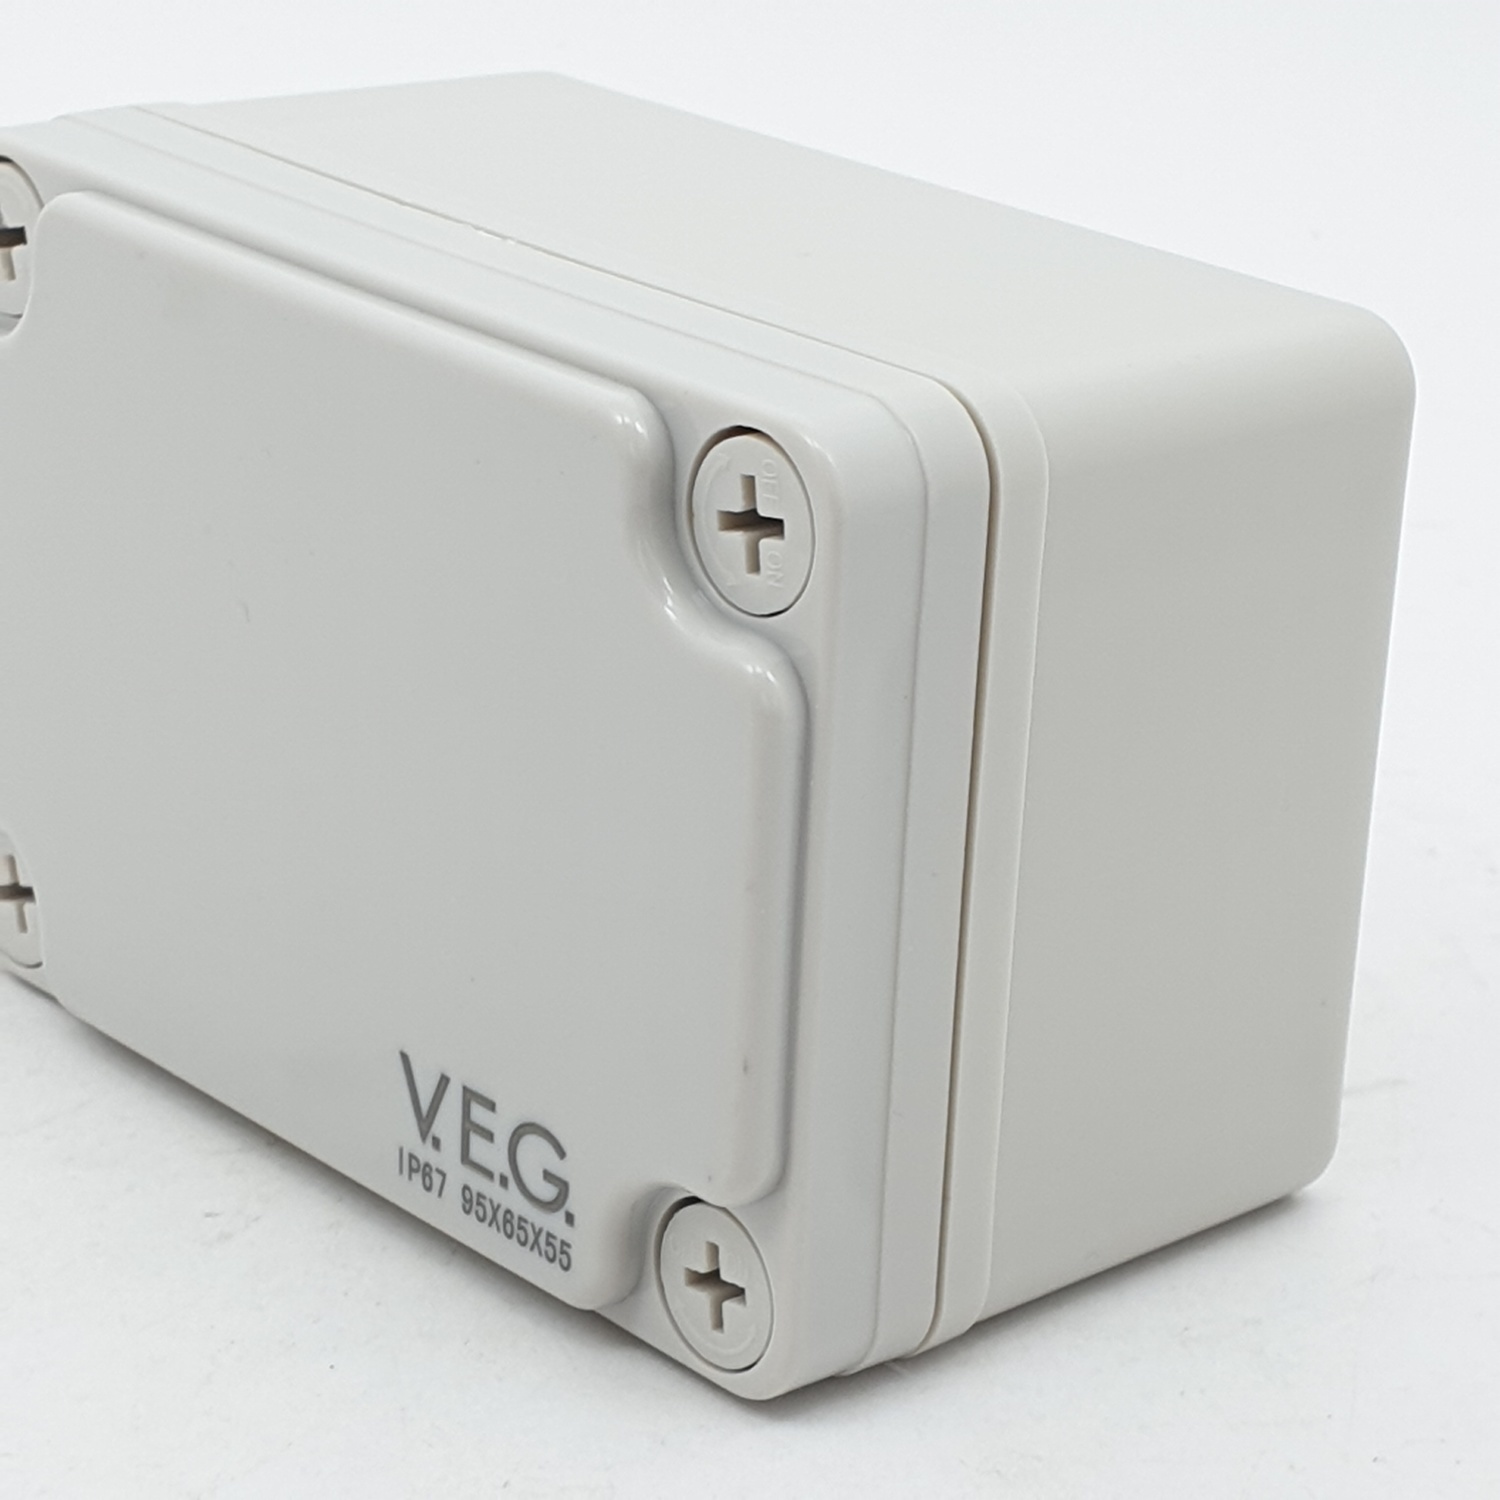 V.E.G. กล่องกันน้ำพลาสติก รุ่น THE-01 95×65×55mm สีเทา